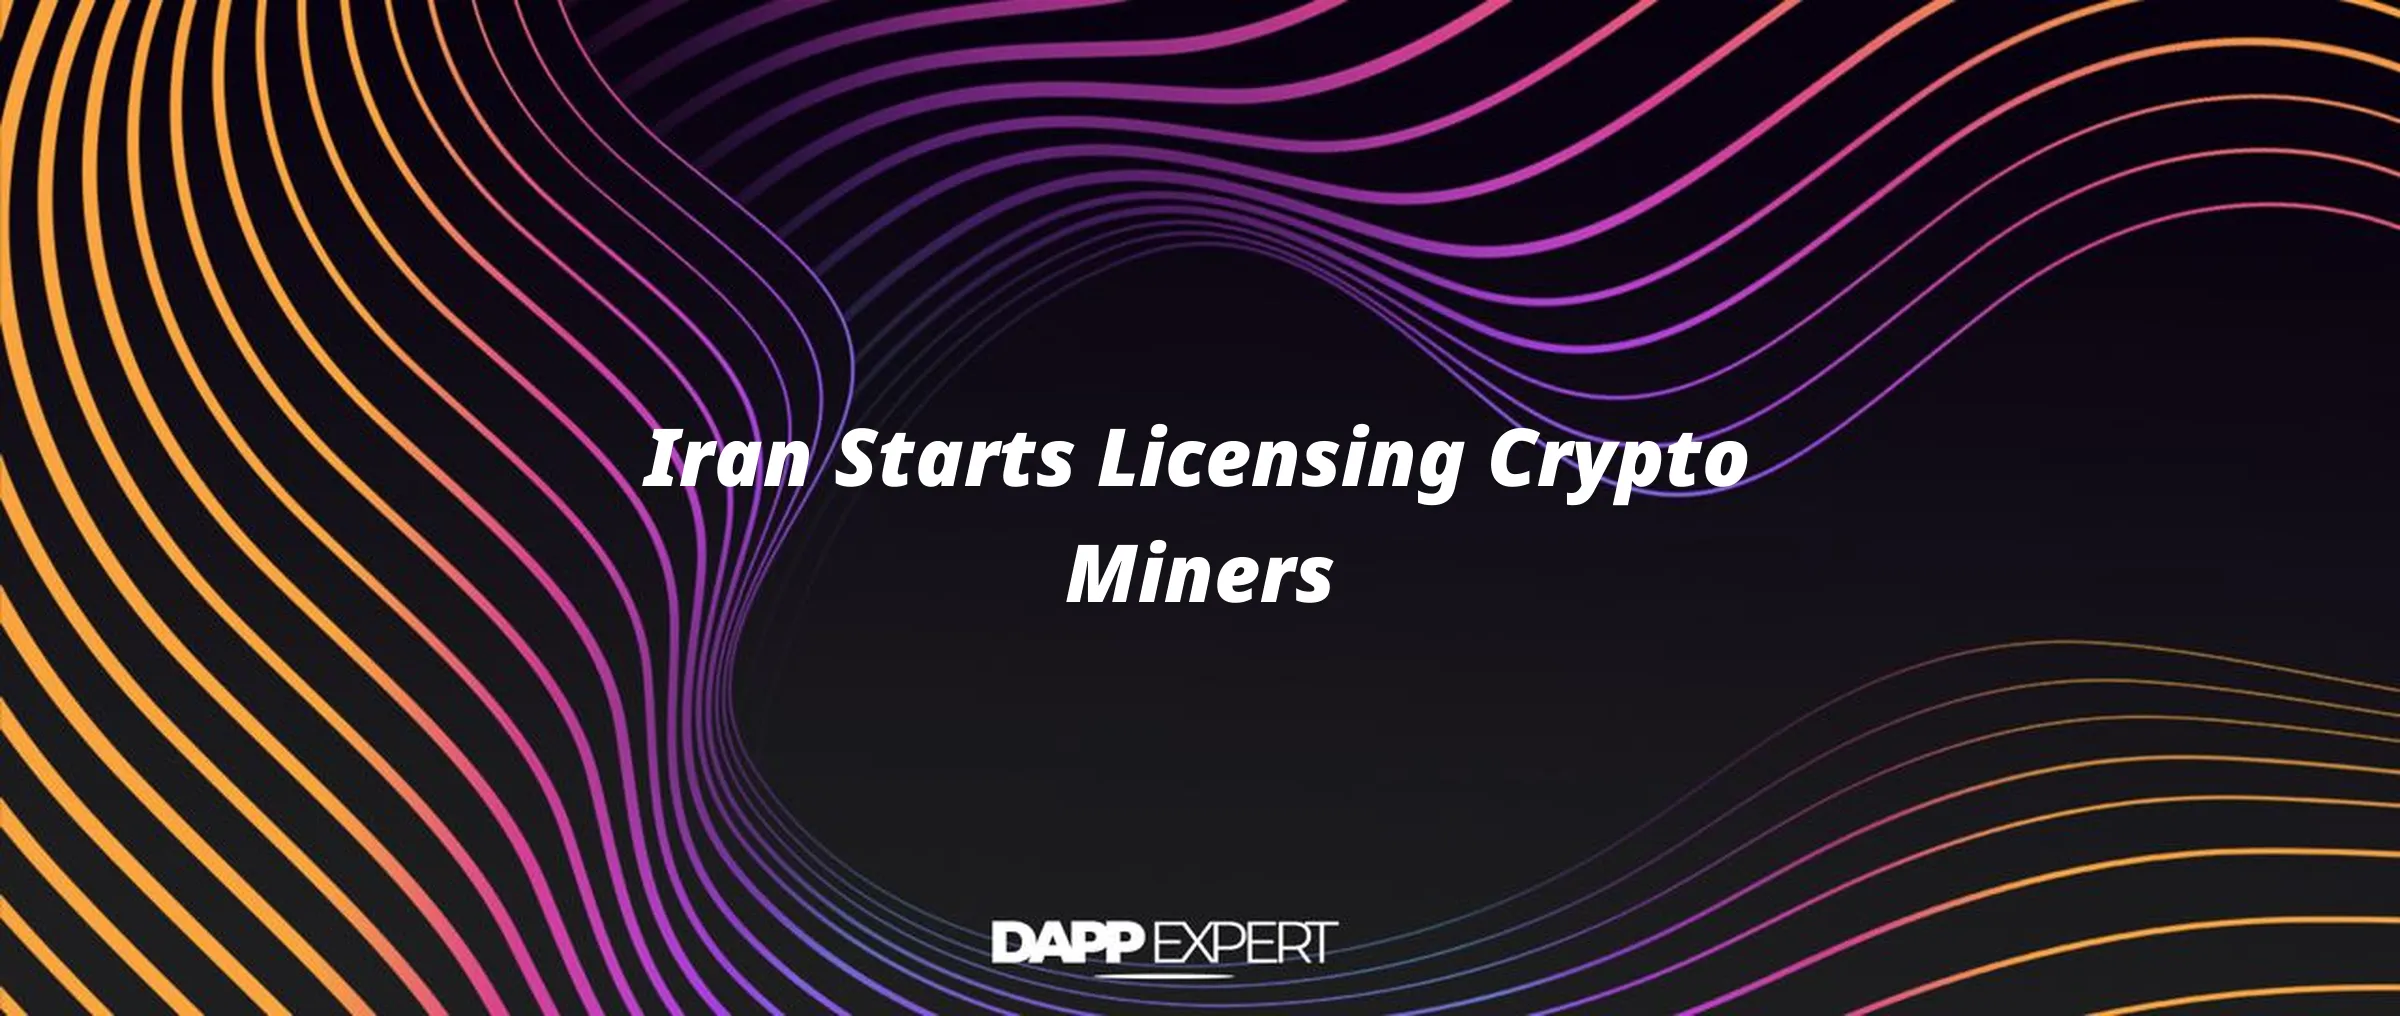 Iran Starts Licensing Crypto Miners